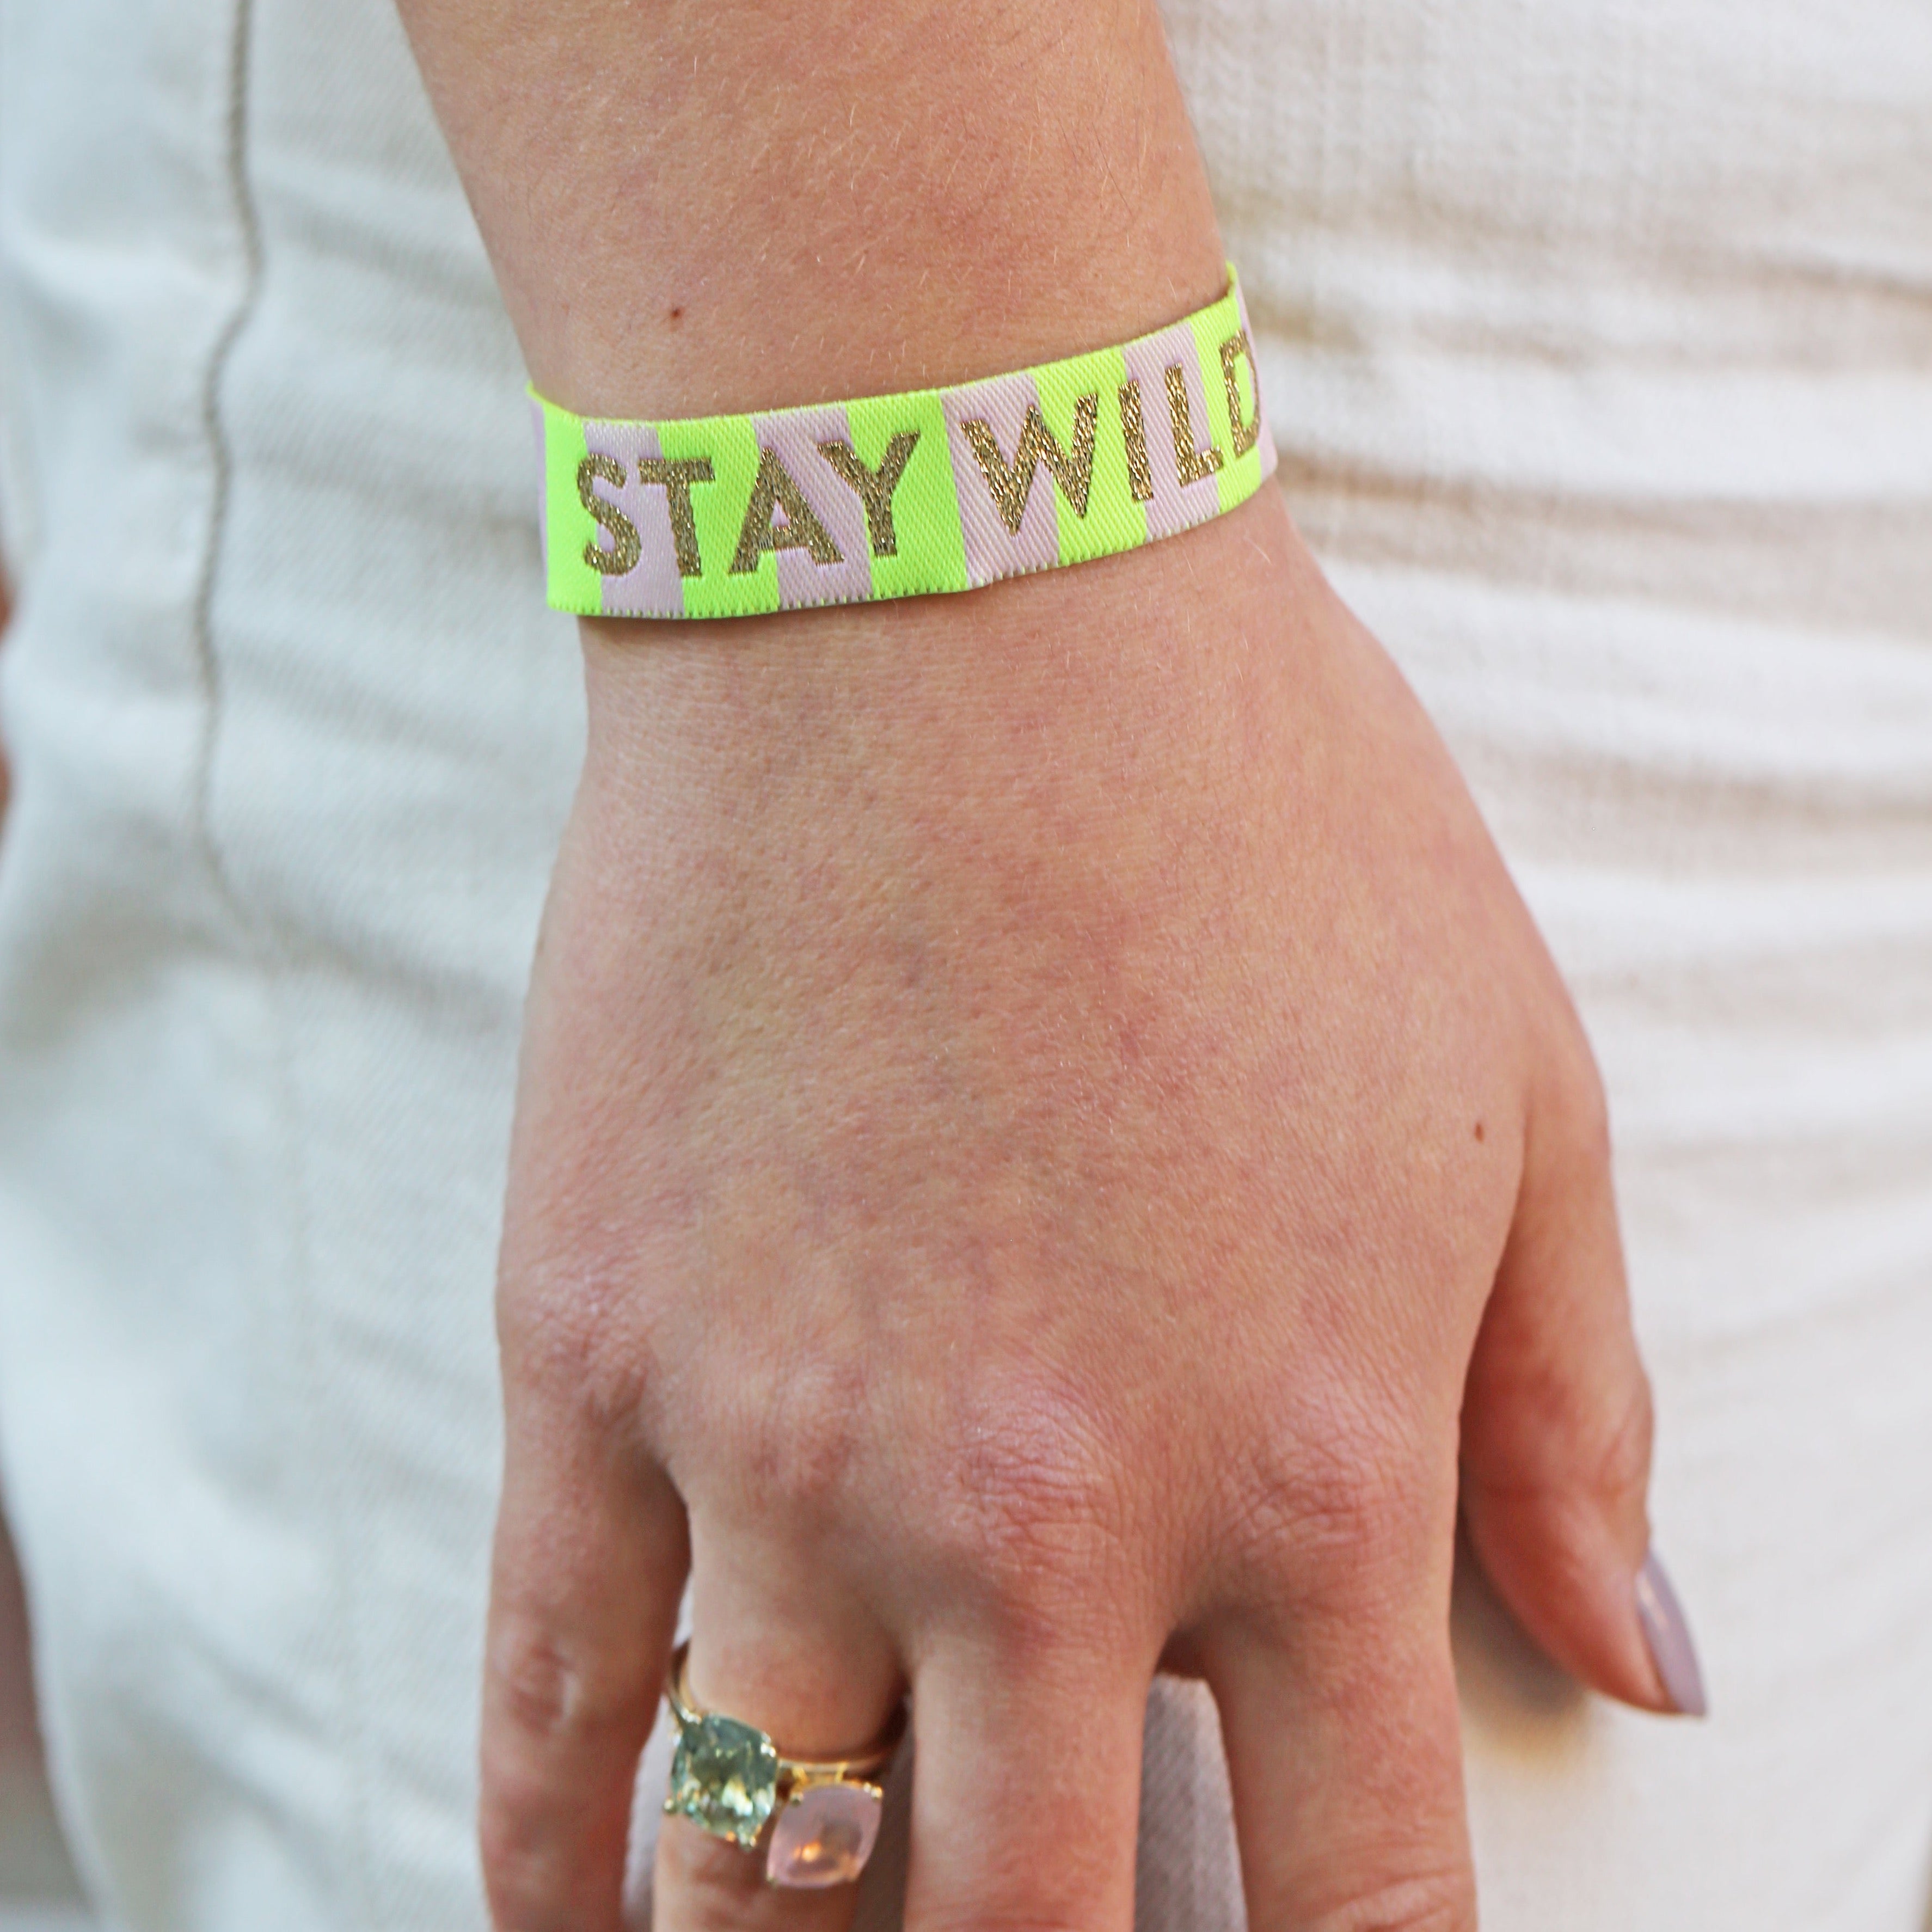 STAY WILD Bracelets - The SISS BLISS GmbH